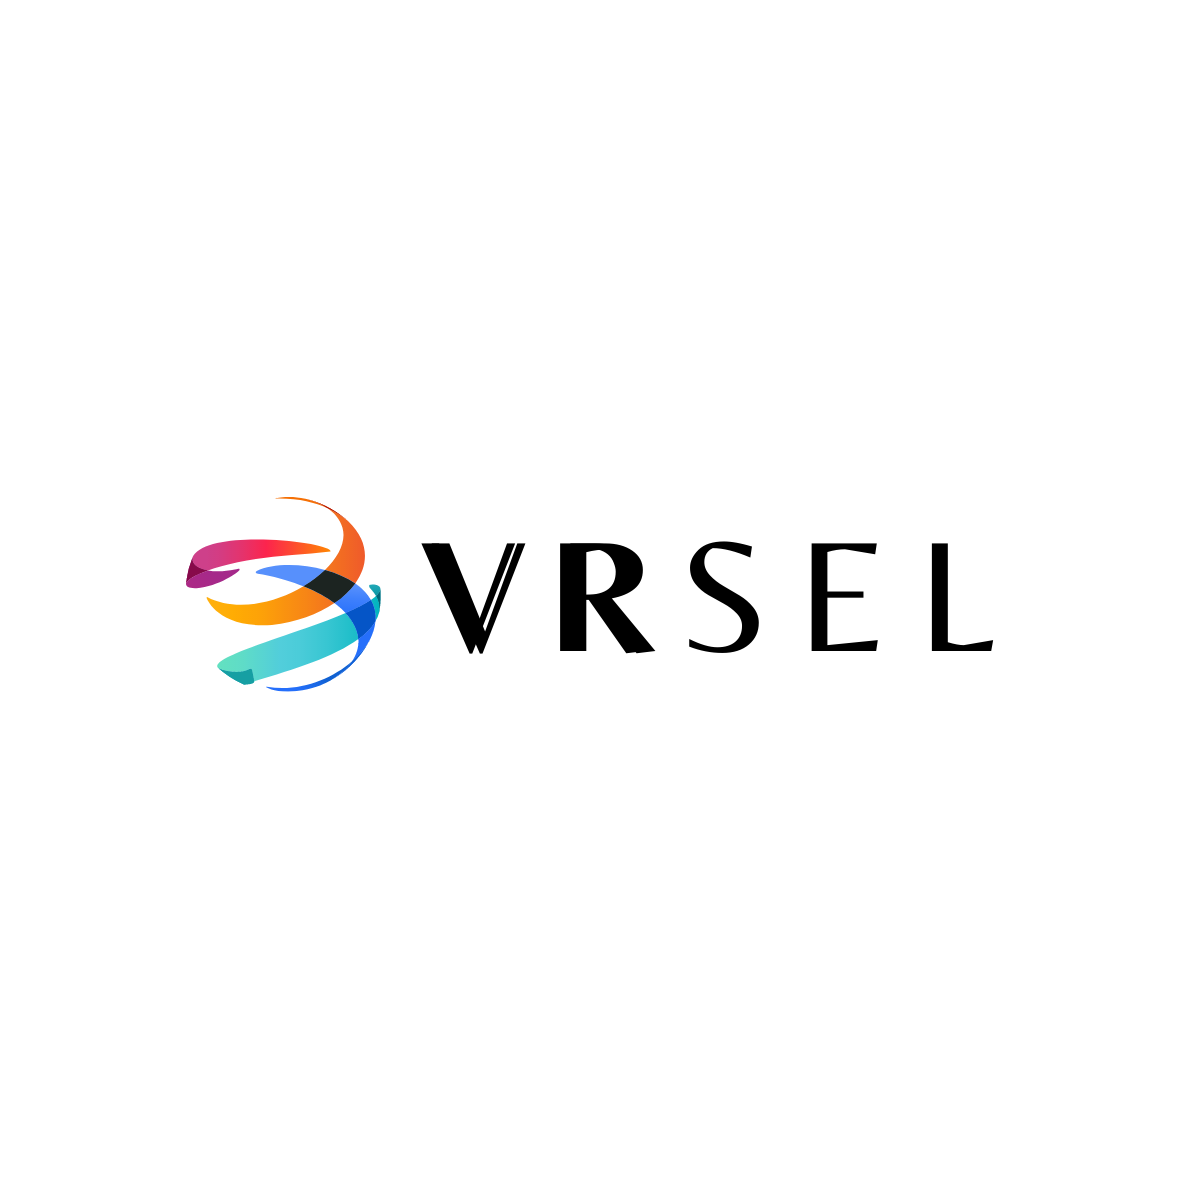 vrsel.com - domain for sale